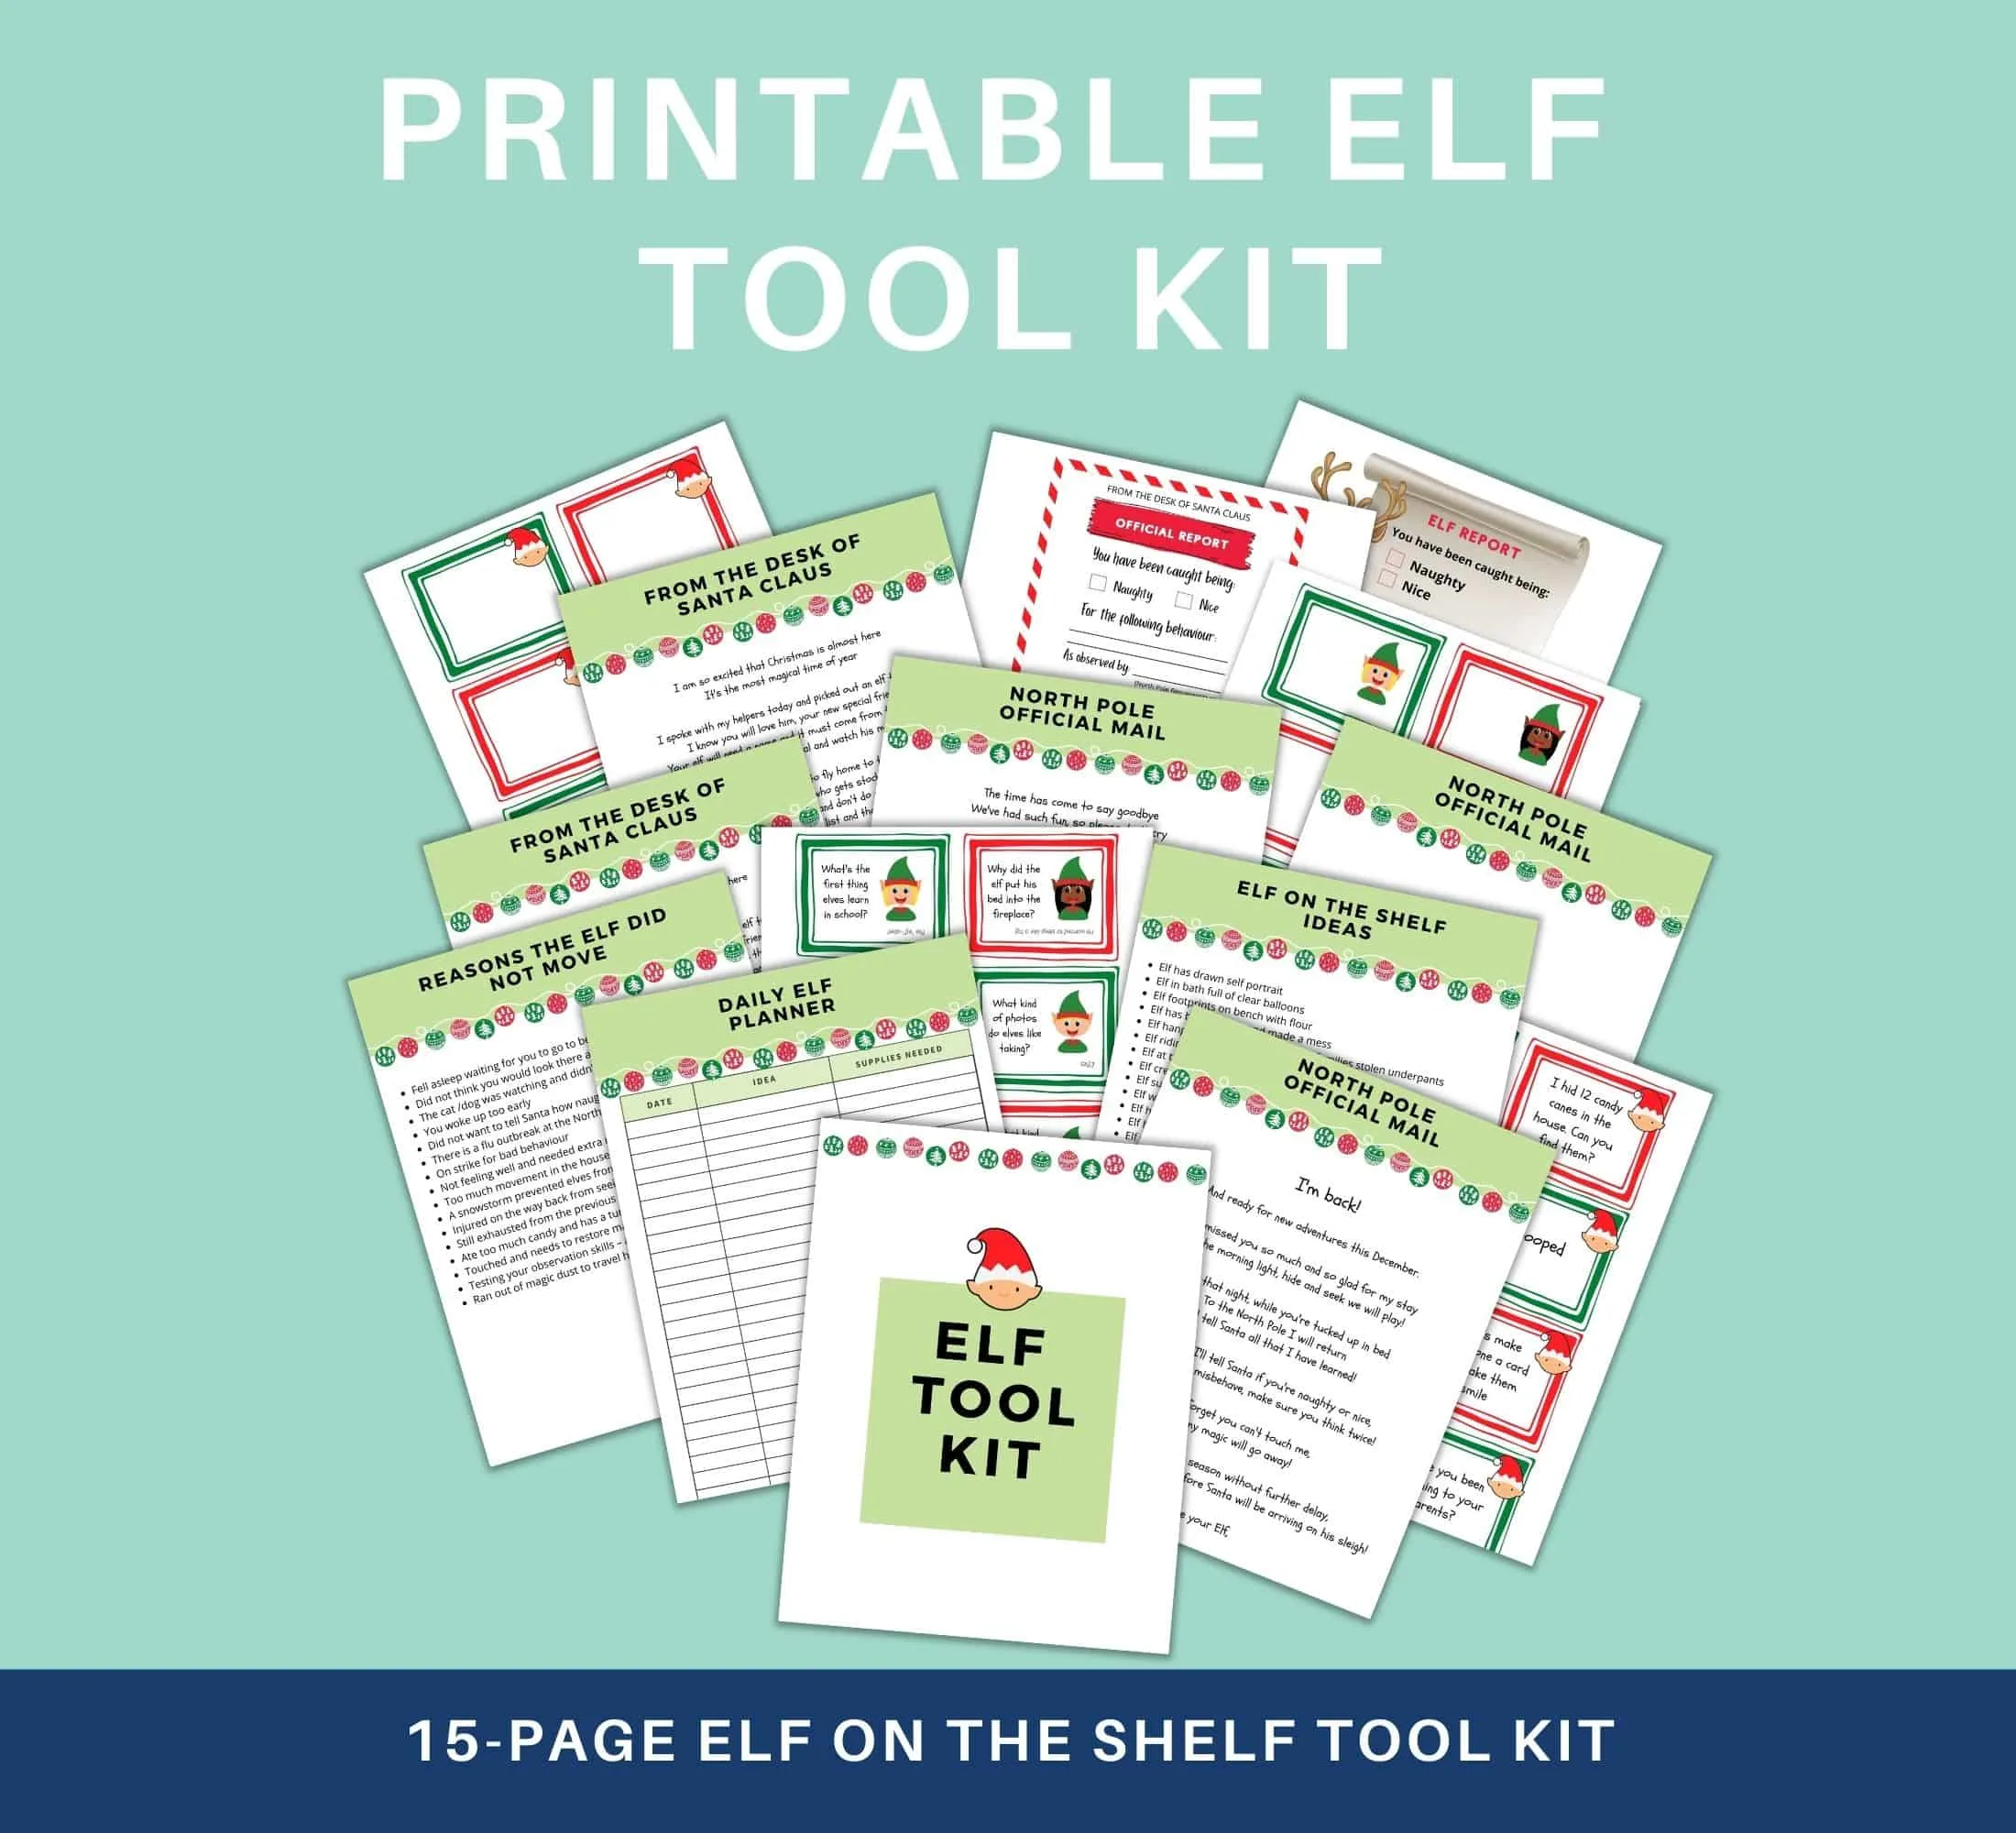 Elf on the shelf tool kit